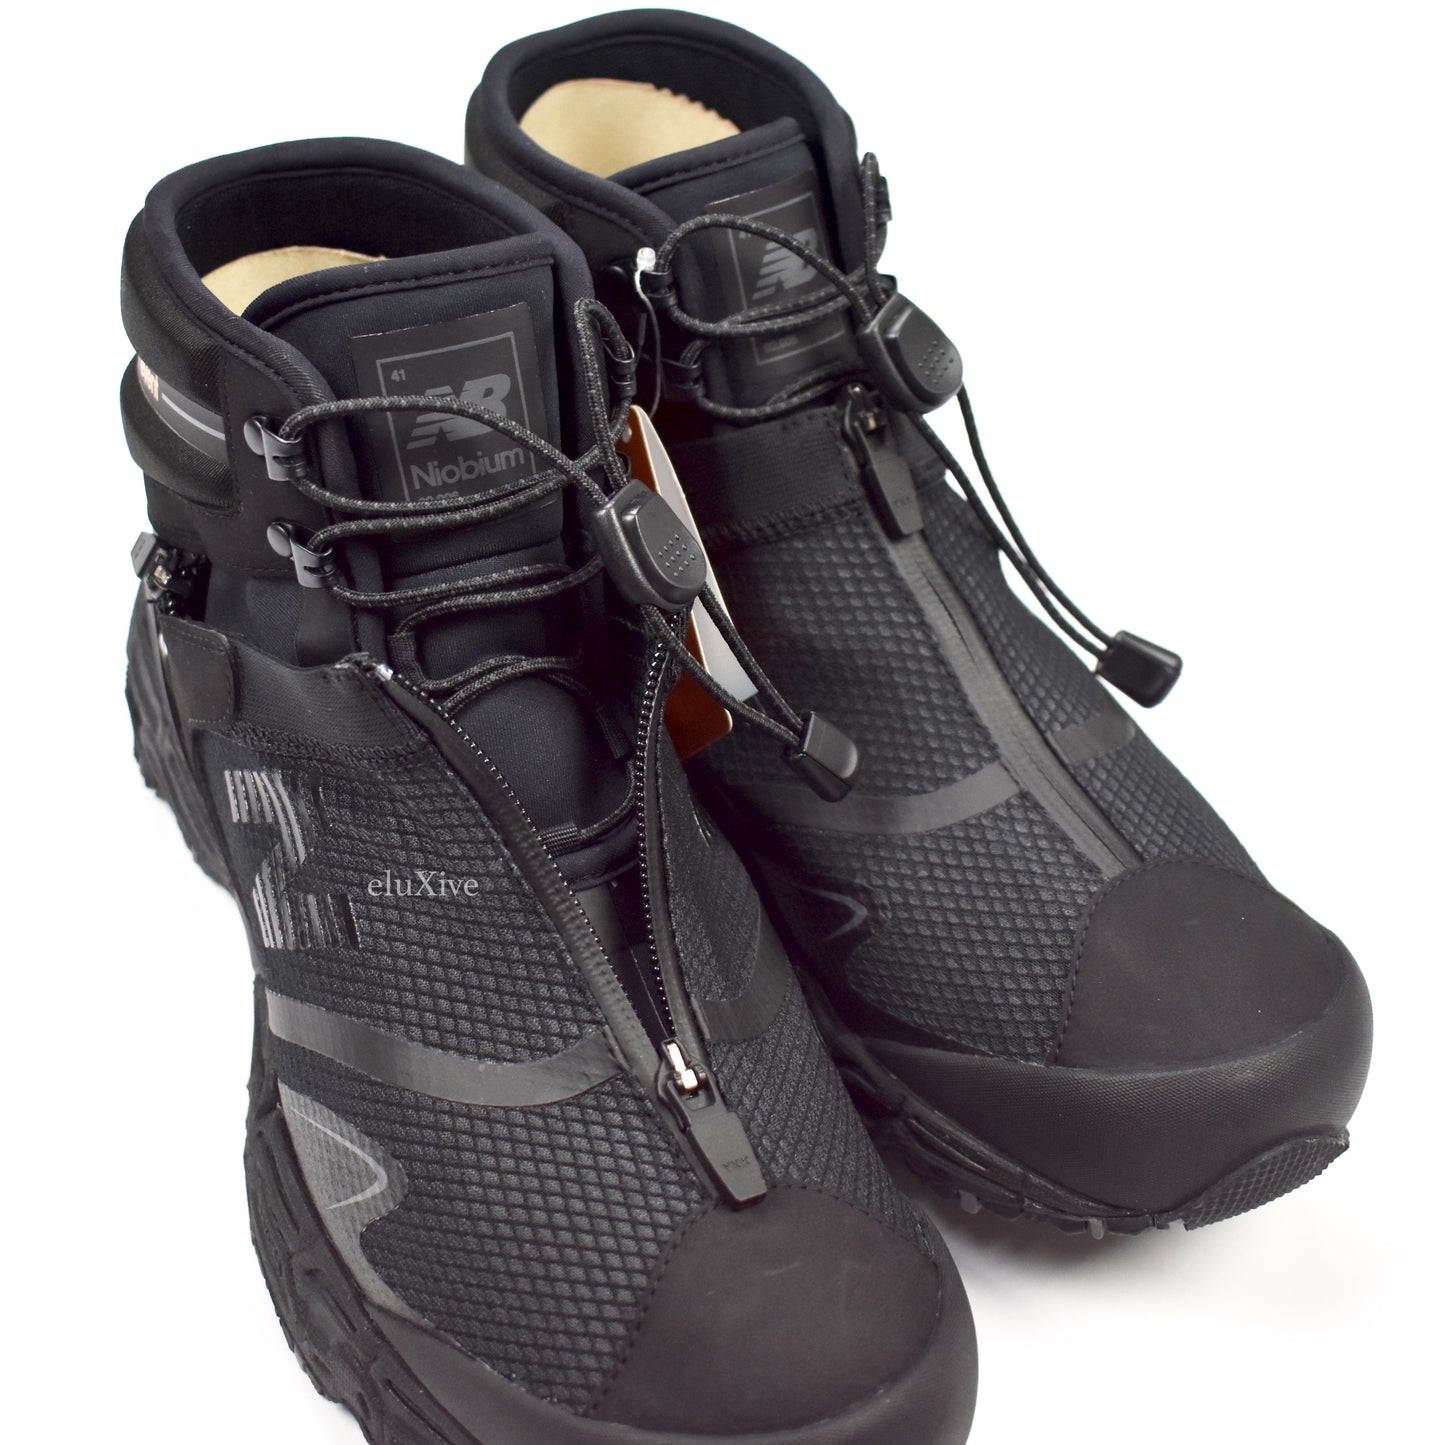 New Balance - Niobium MSNB10L Convertible Hiking Boots